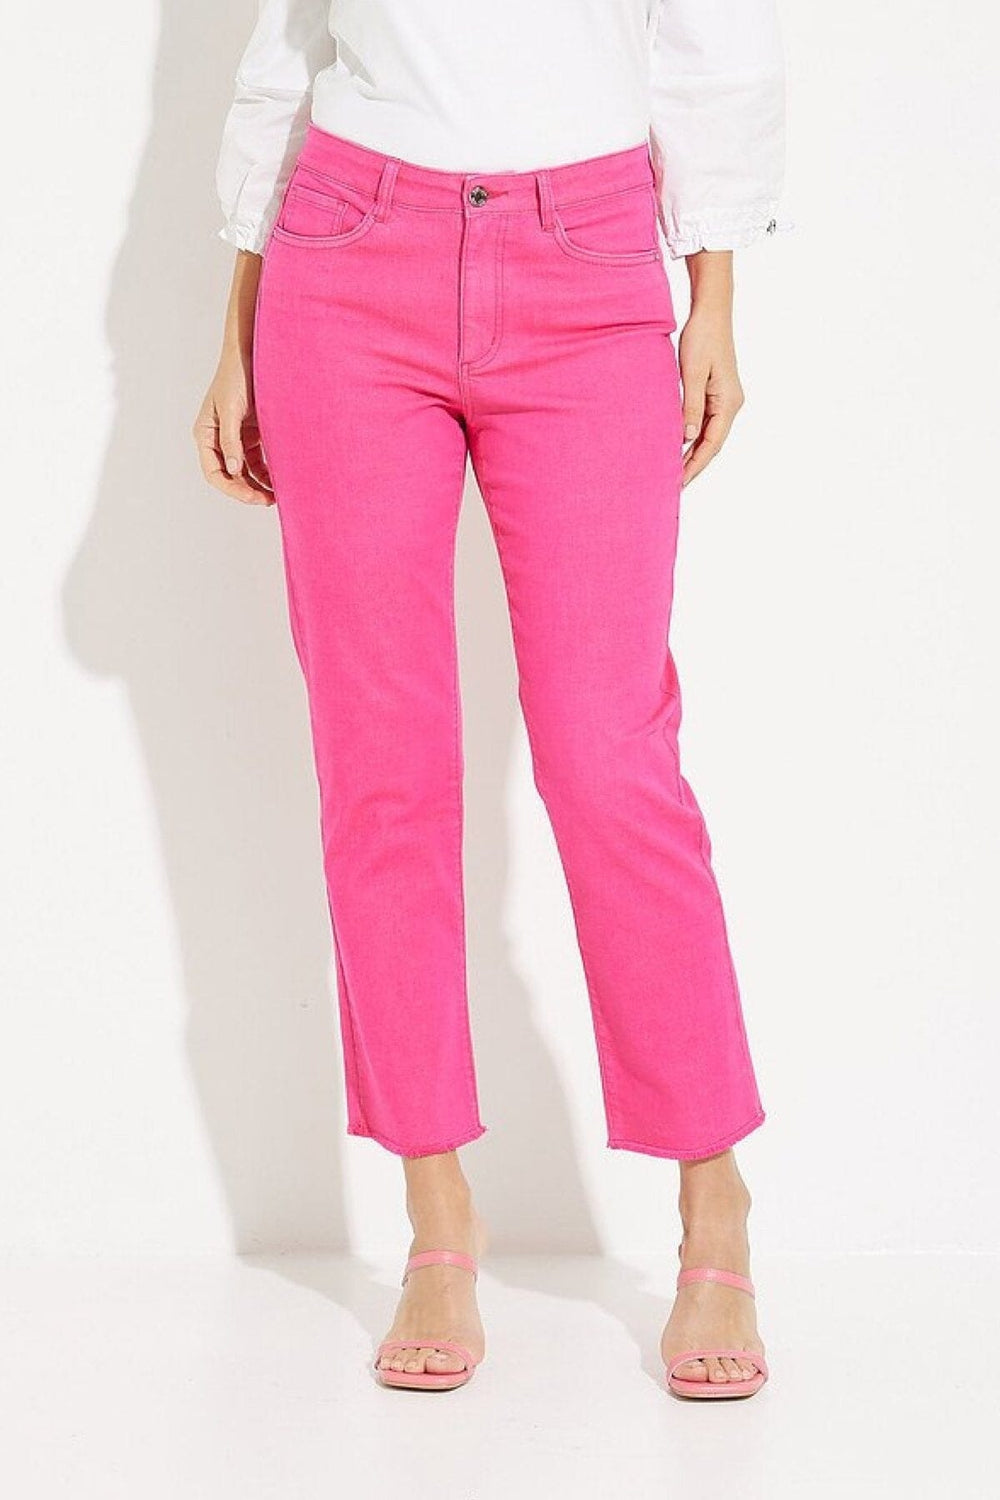 Pantalon modèle jean Femme - Bas - Pantalon - Jeans Joseph Ribkoff